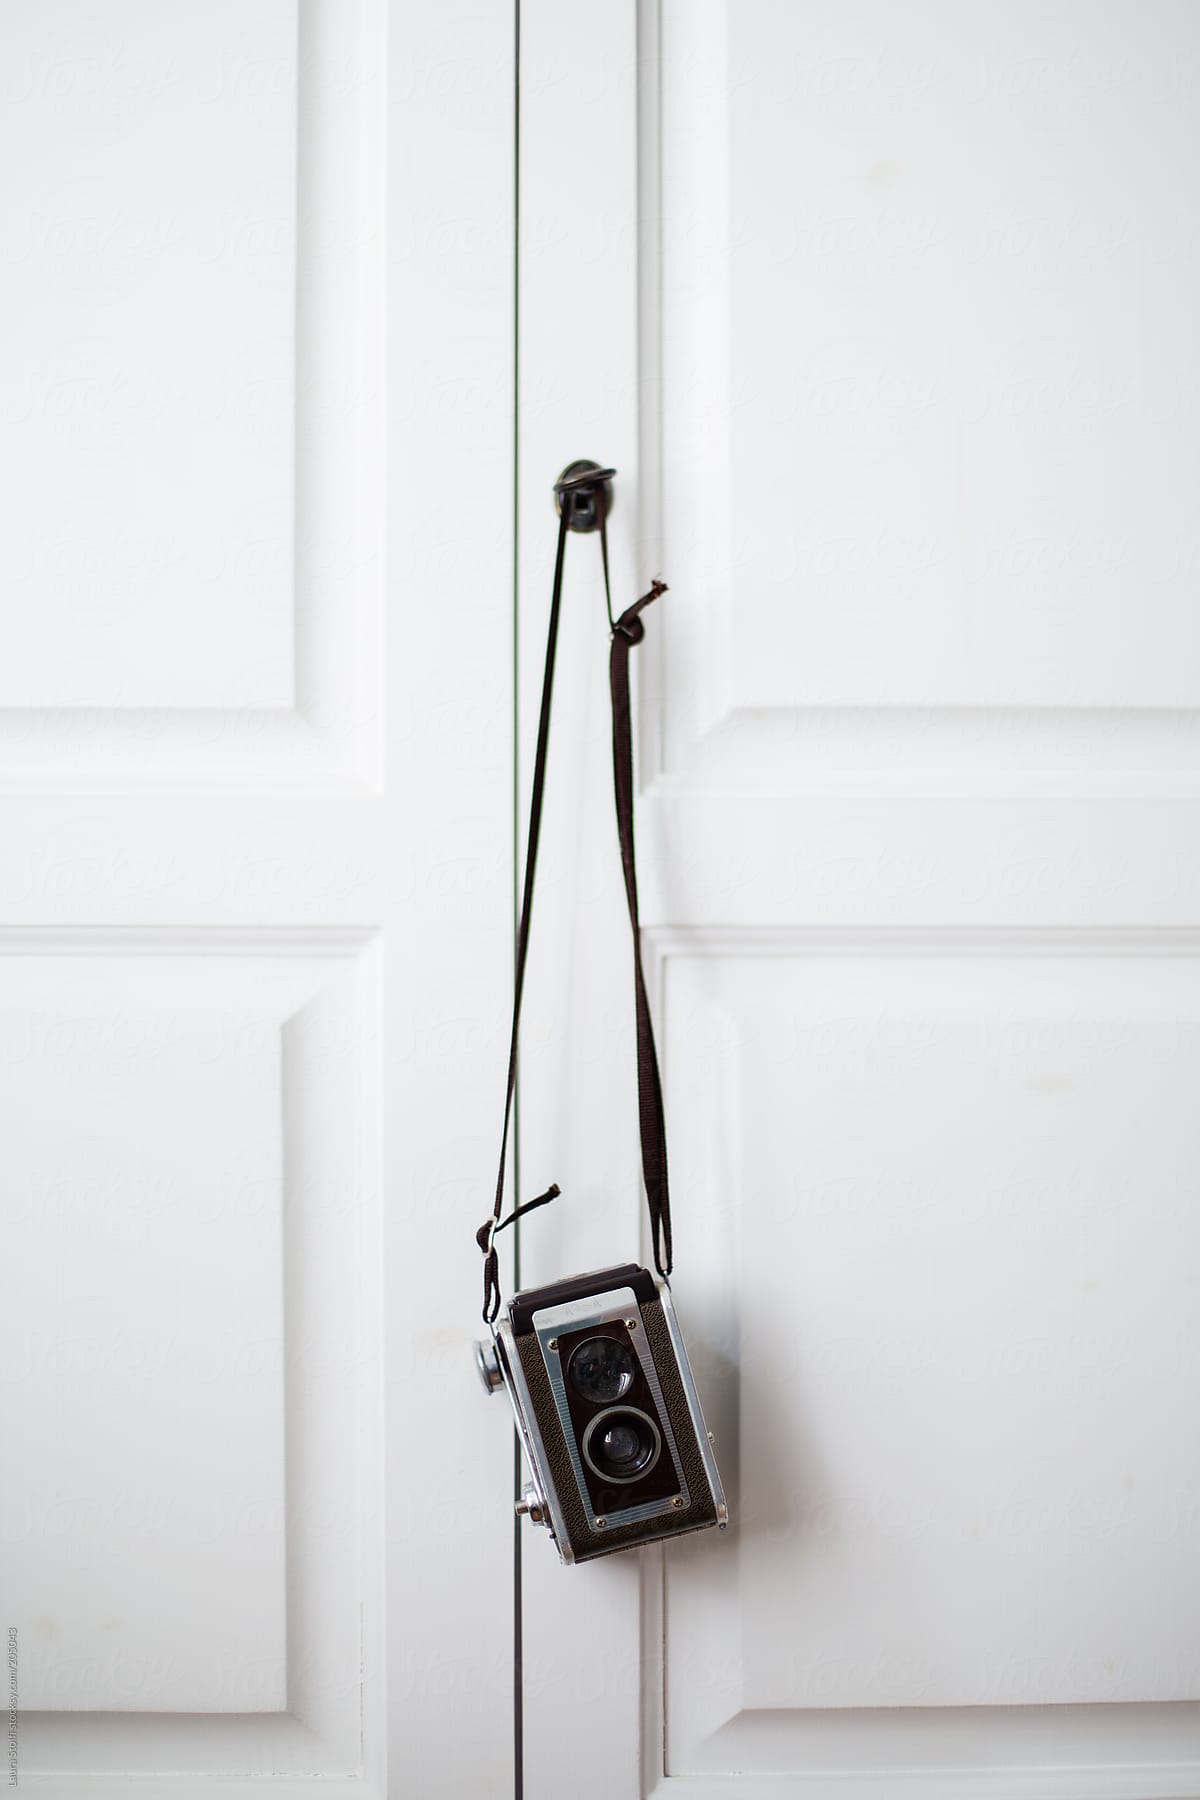 Old medium-format twin lens reflex camera hanging from white closet doors